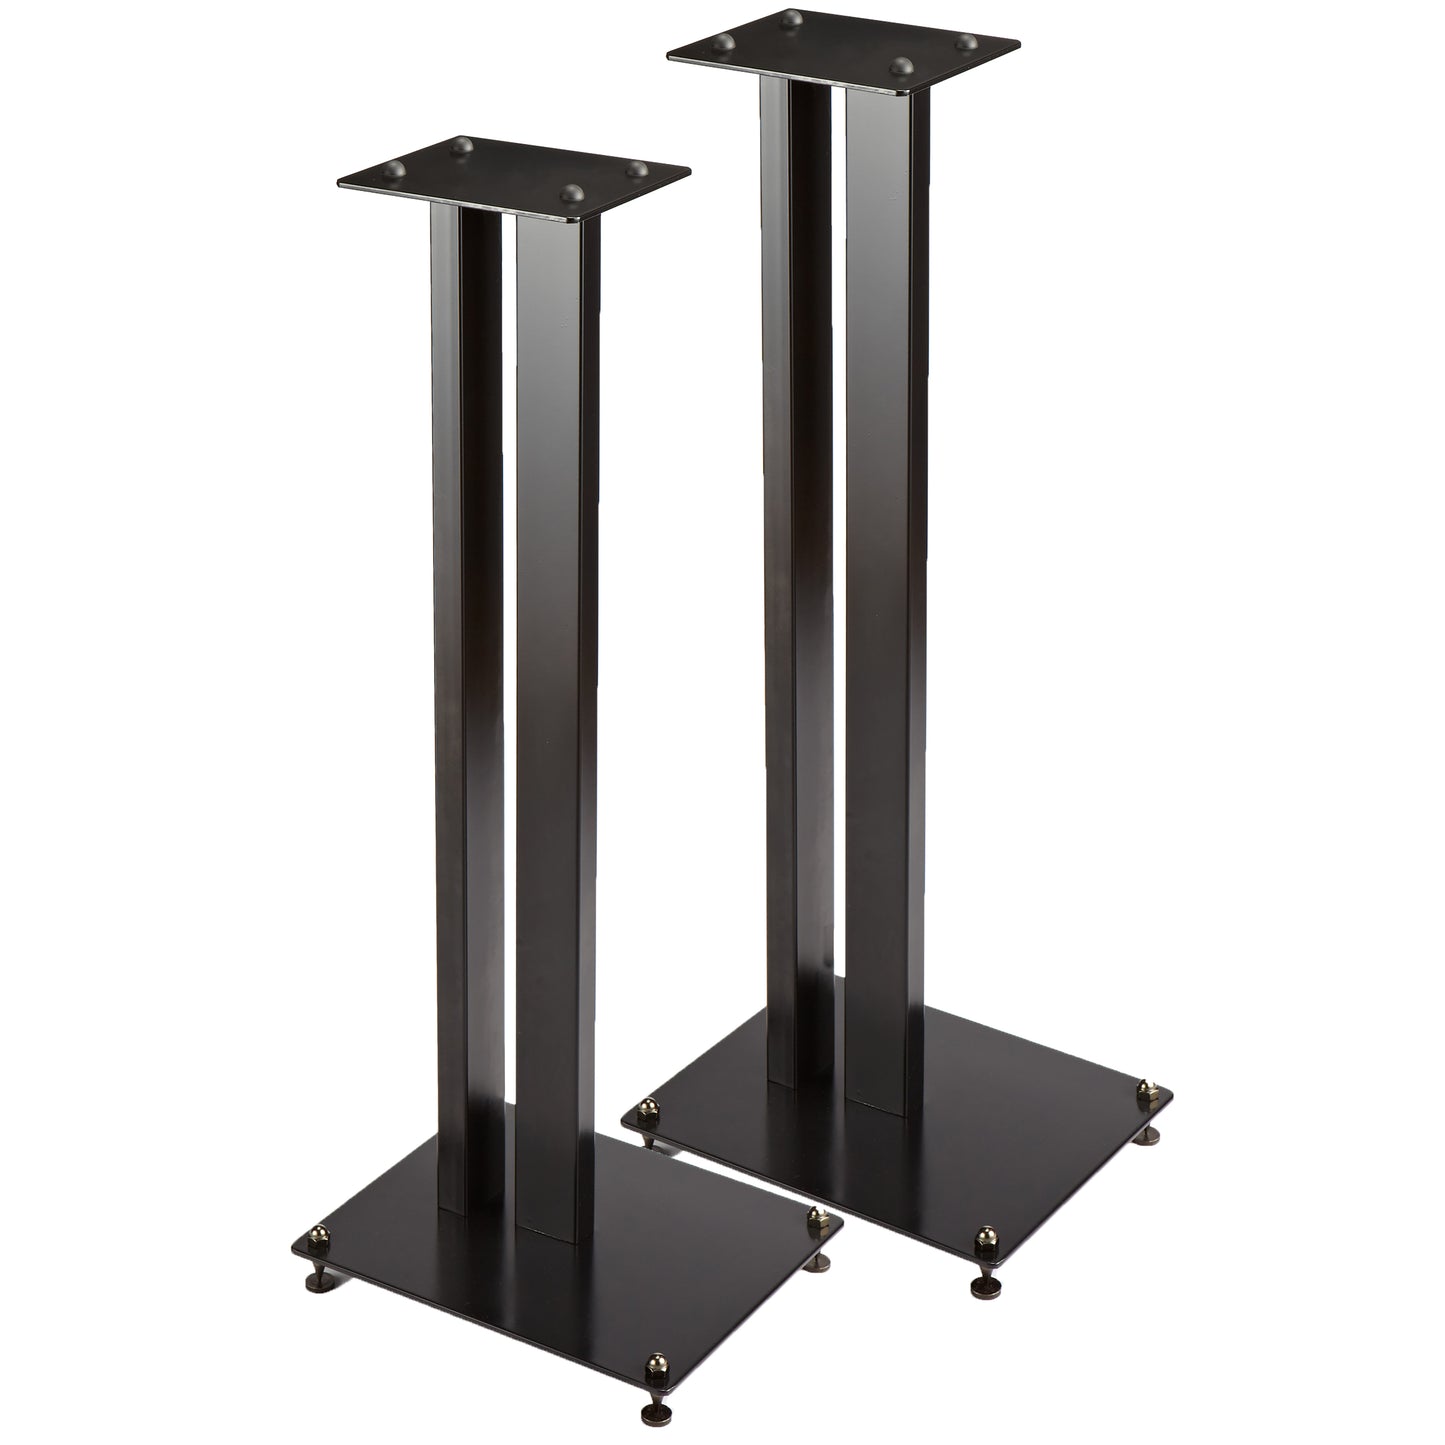 Tauris SP199-38 Speaker Stand Pair 965mm Semi Gloss Metal Speaker Stands Black